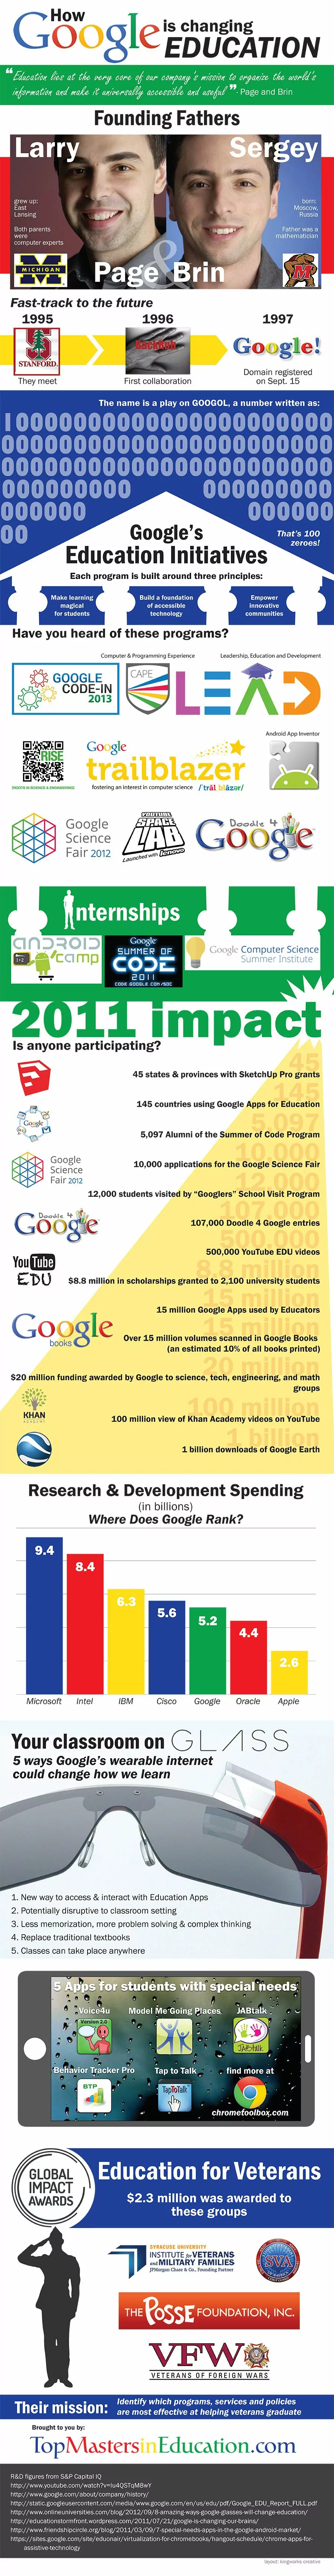 Google changing education